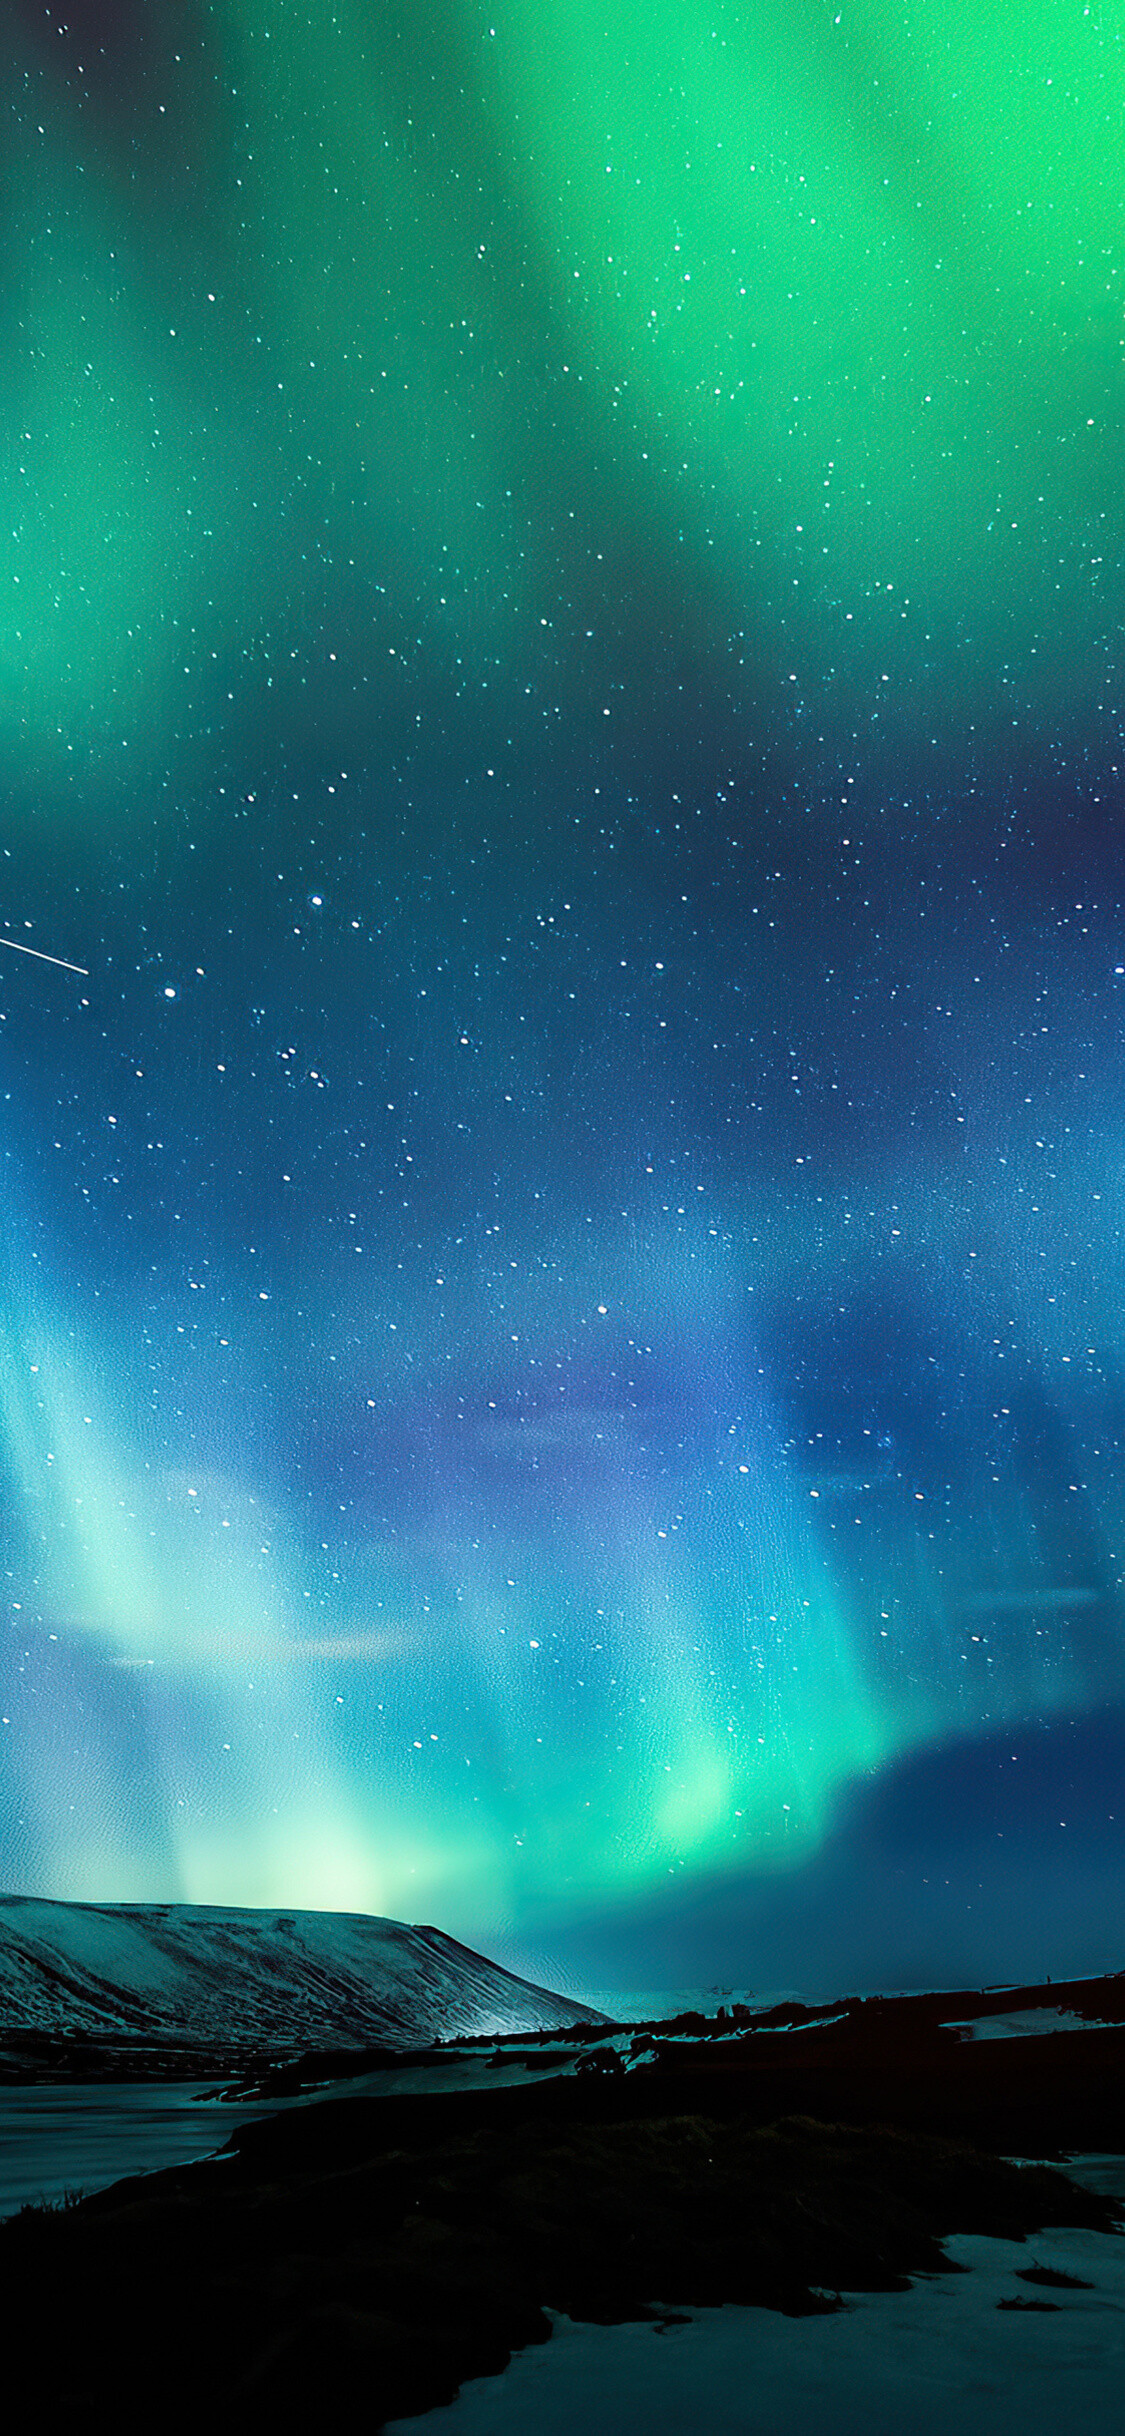 Aurora Borealis: A natural phenomenon found in both the northern and southern hemispheres. 1130x2440 HD Wallpaper.